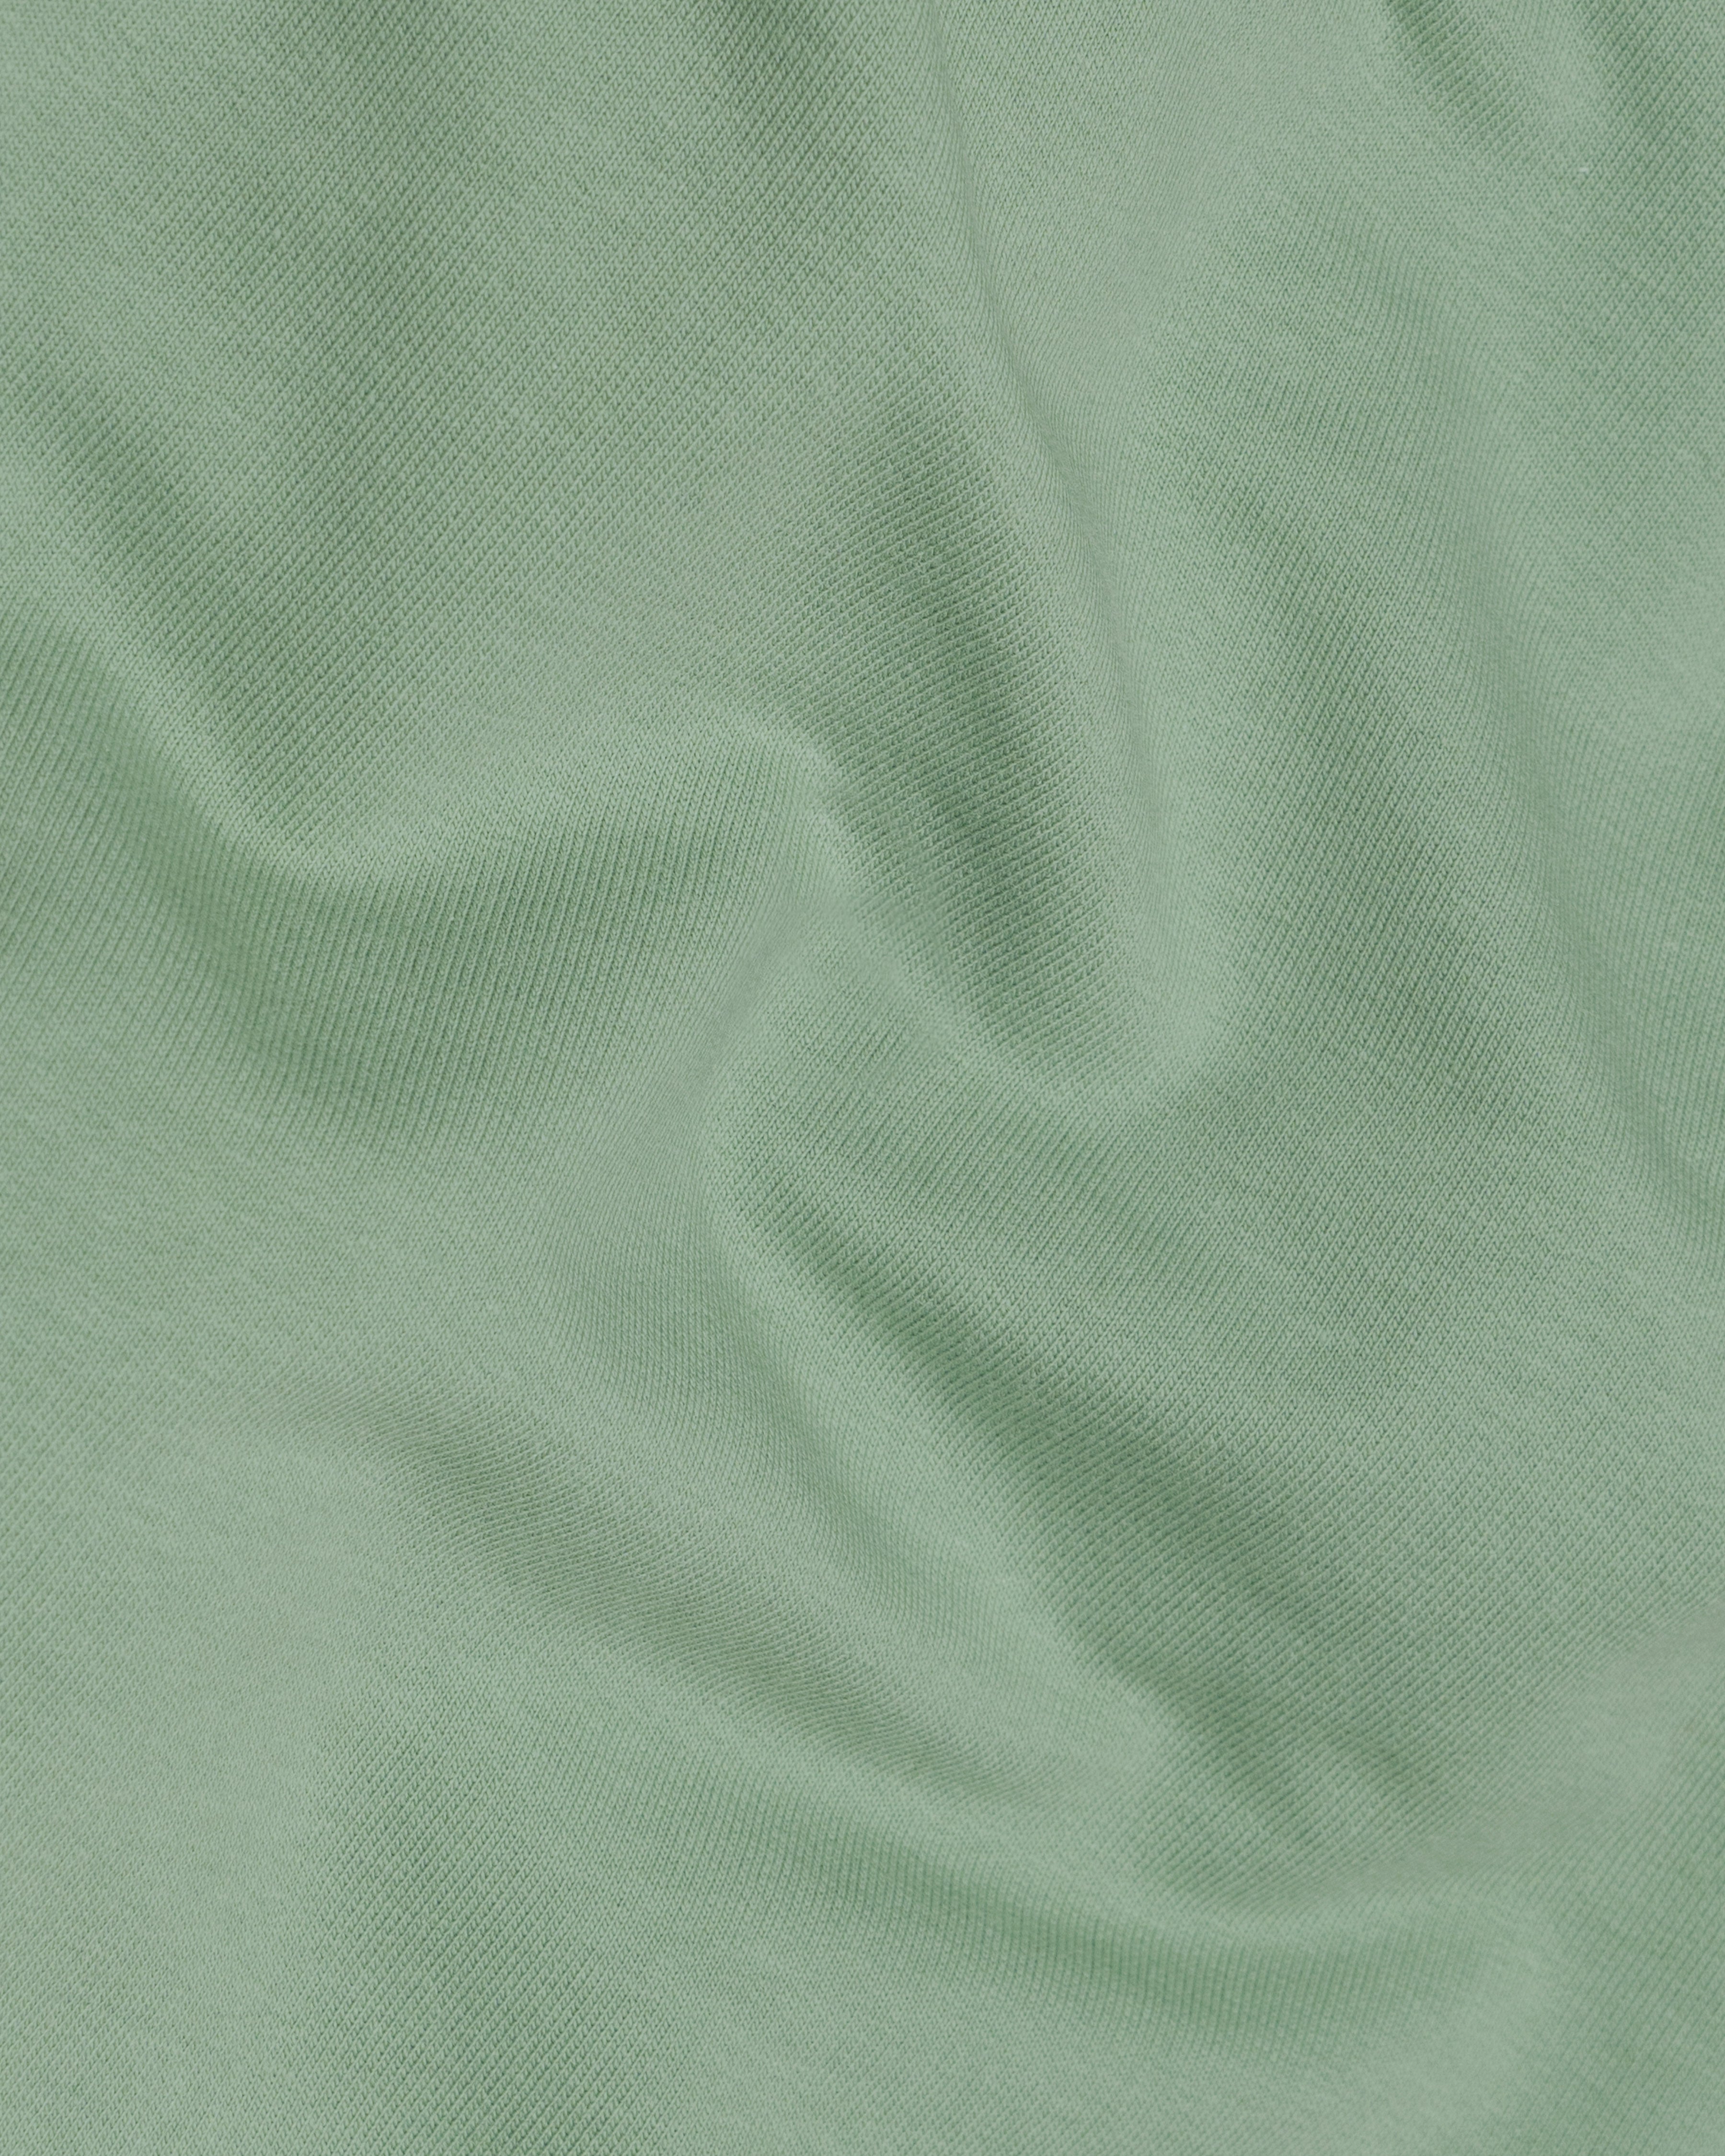 Mantle Green With Navy Blue Full Sleeve Super Soft Polo SweatshirtTS636-M, TS636-M, TS636-A, TS636-XL, TS636-XXL, TS636-3XL, TS636-4XL